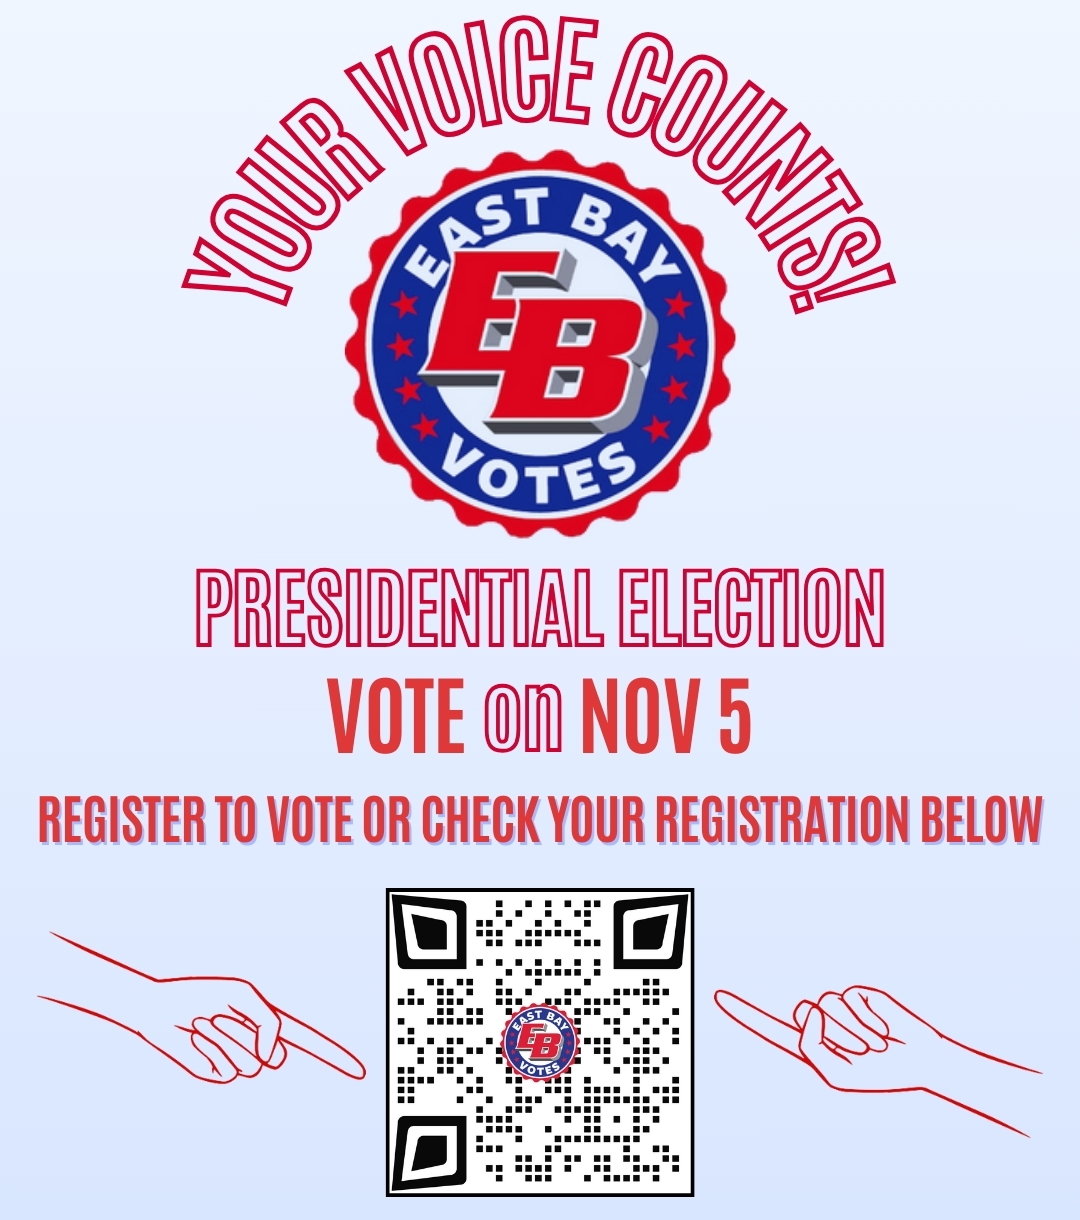 Presidential Election: Vote on Nov 5